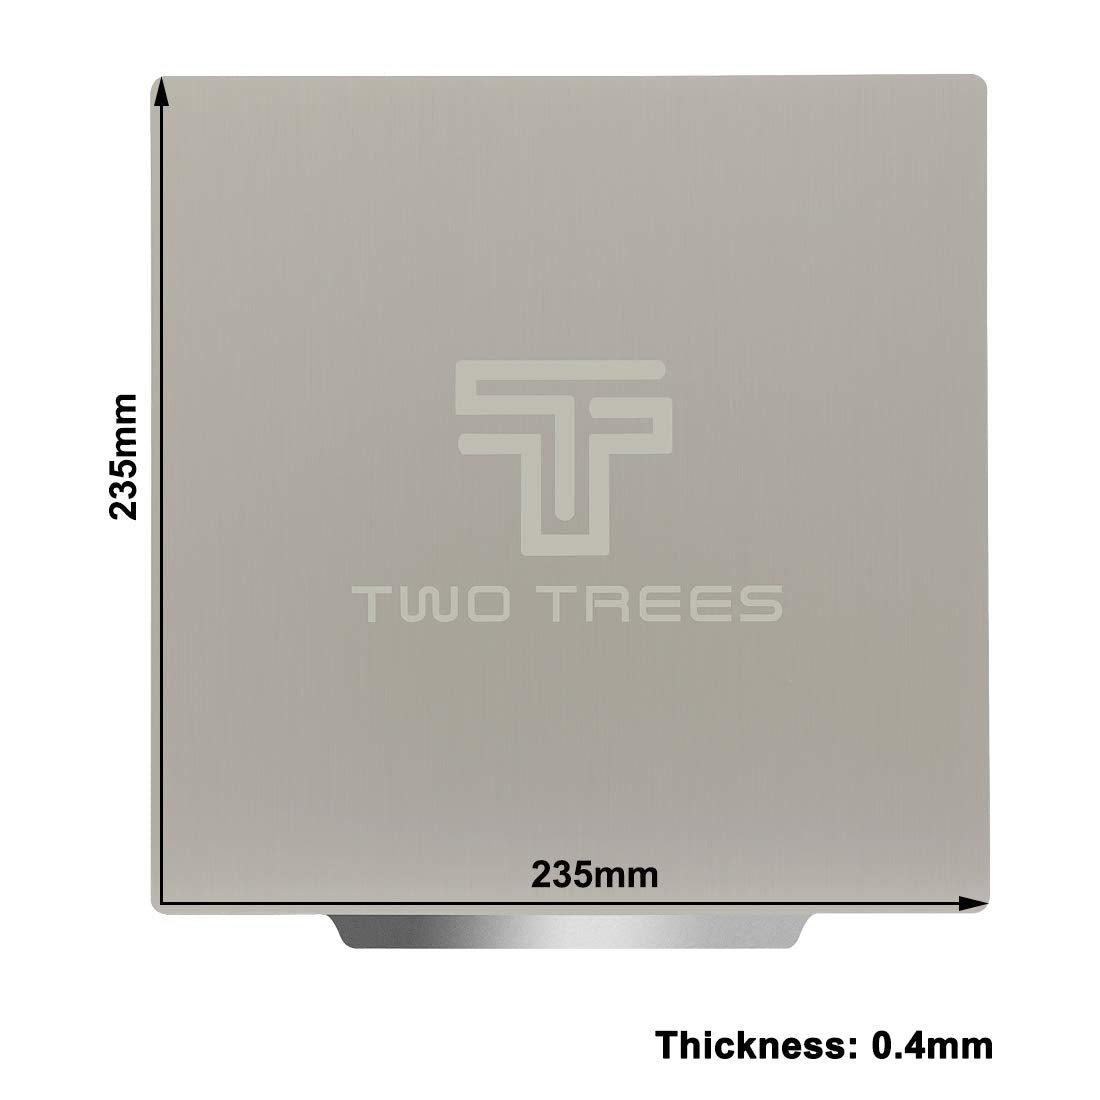 Two Trees PEI Magnetic Flexible Print Bed (235 x 235mm) for Ender 3 S1, Ender-3/Pro/V2 / Ender-5/Pro